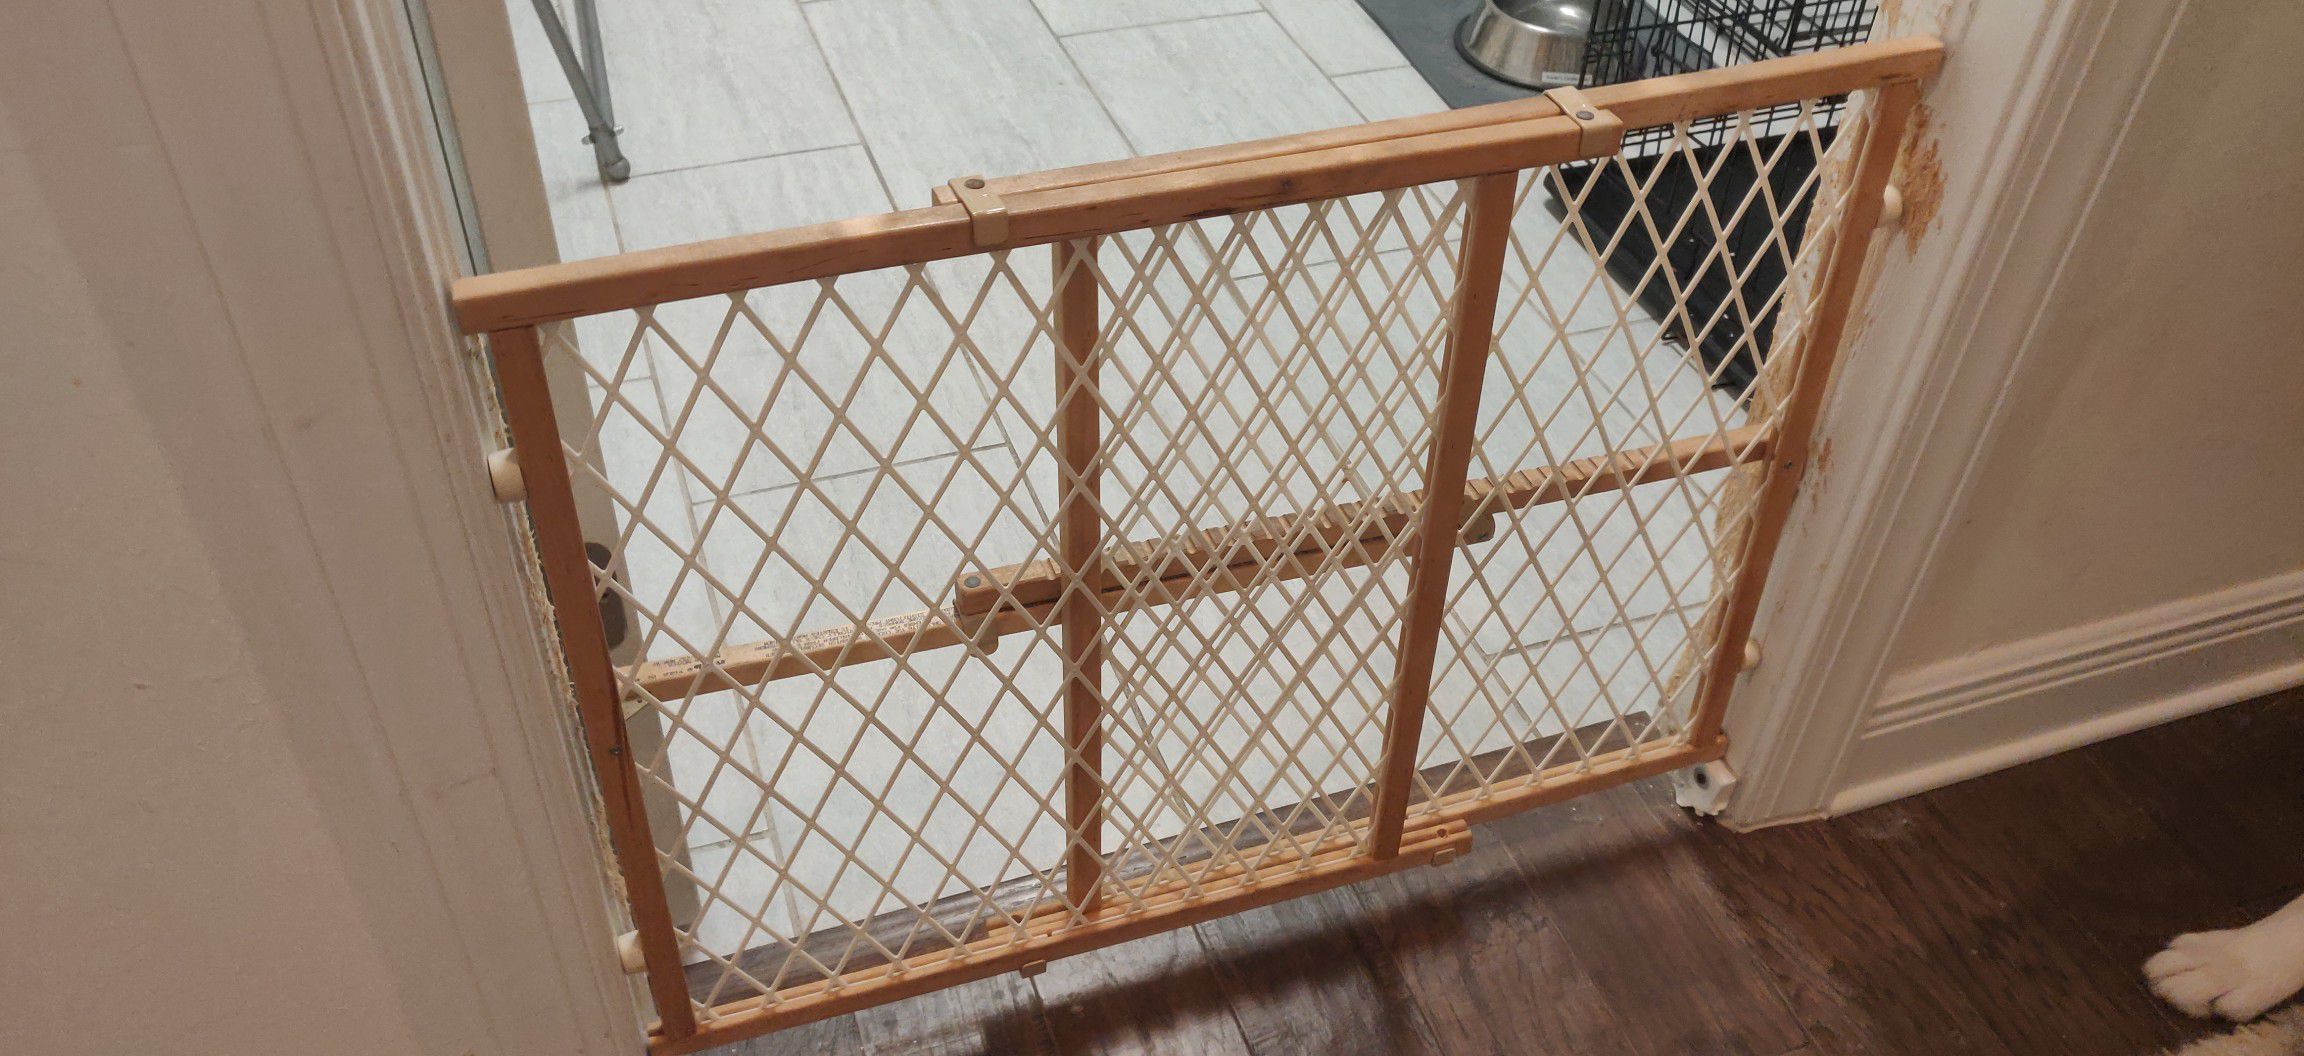 Wooden baby gate / dog gate